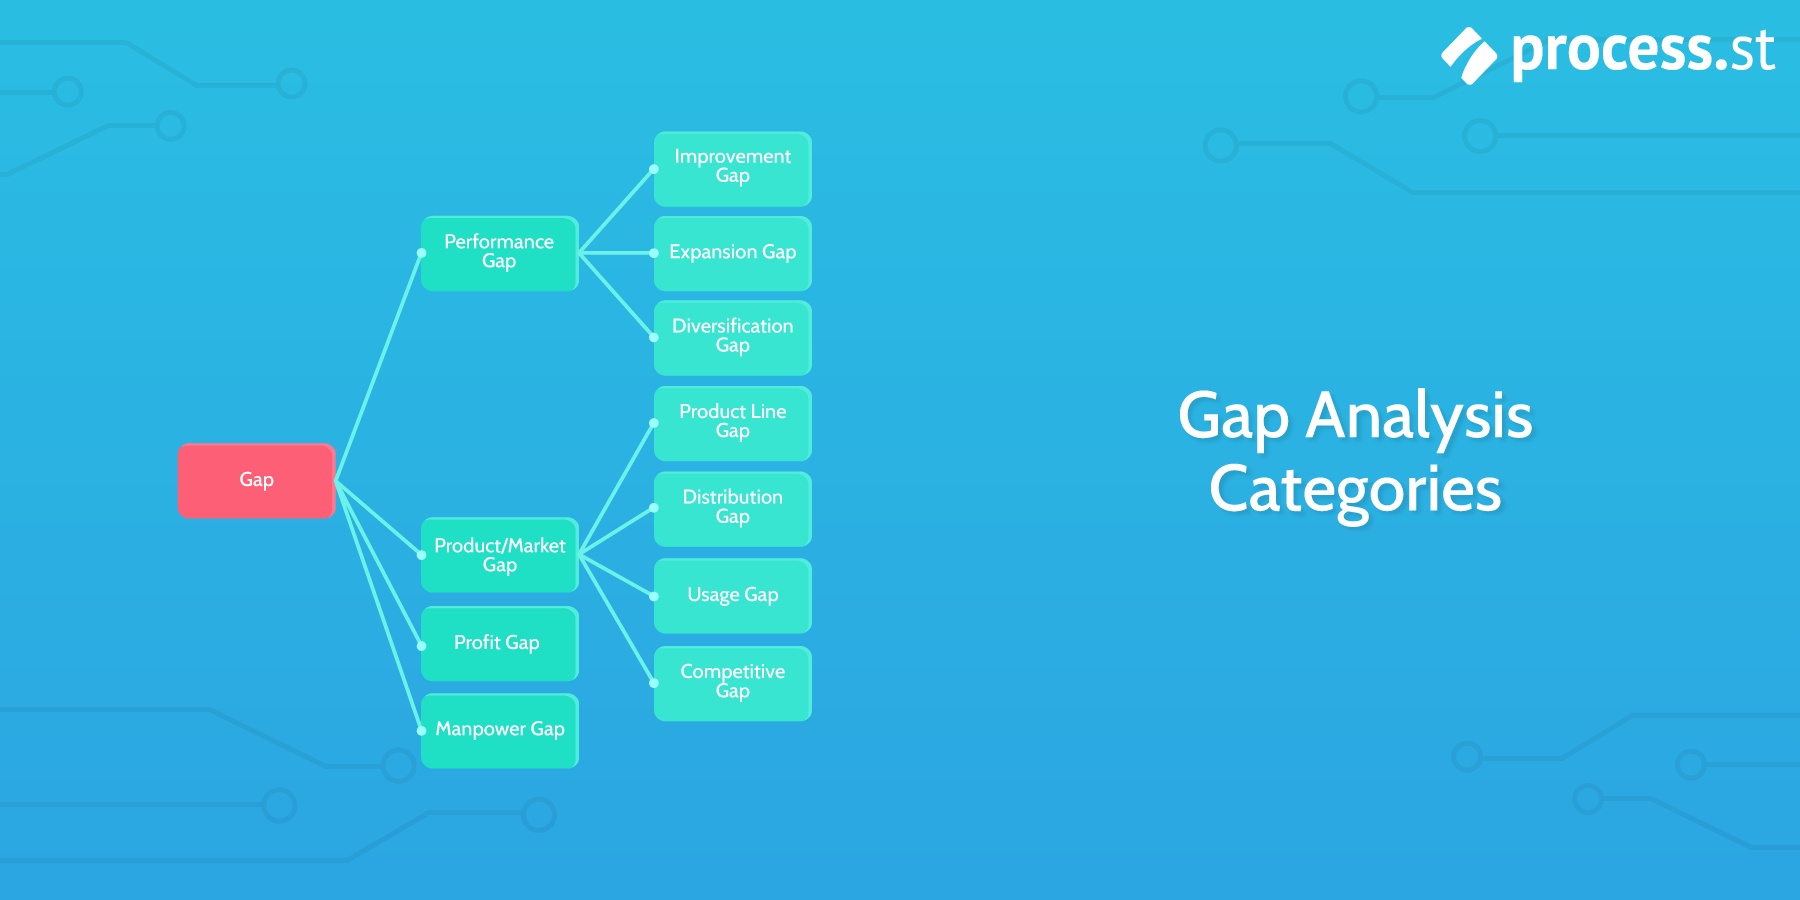 Gap Analysis: How To Bridge The Gap Between Performance And Pertaining To Gap Analysis Report Template Free